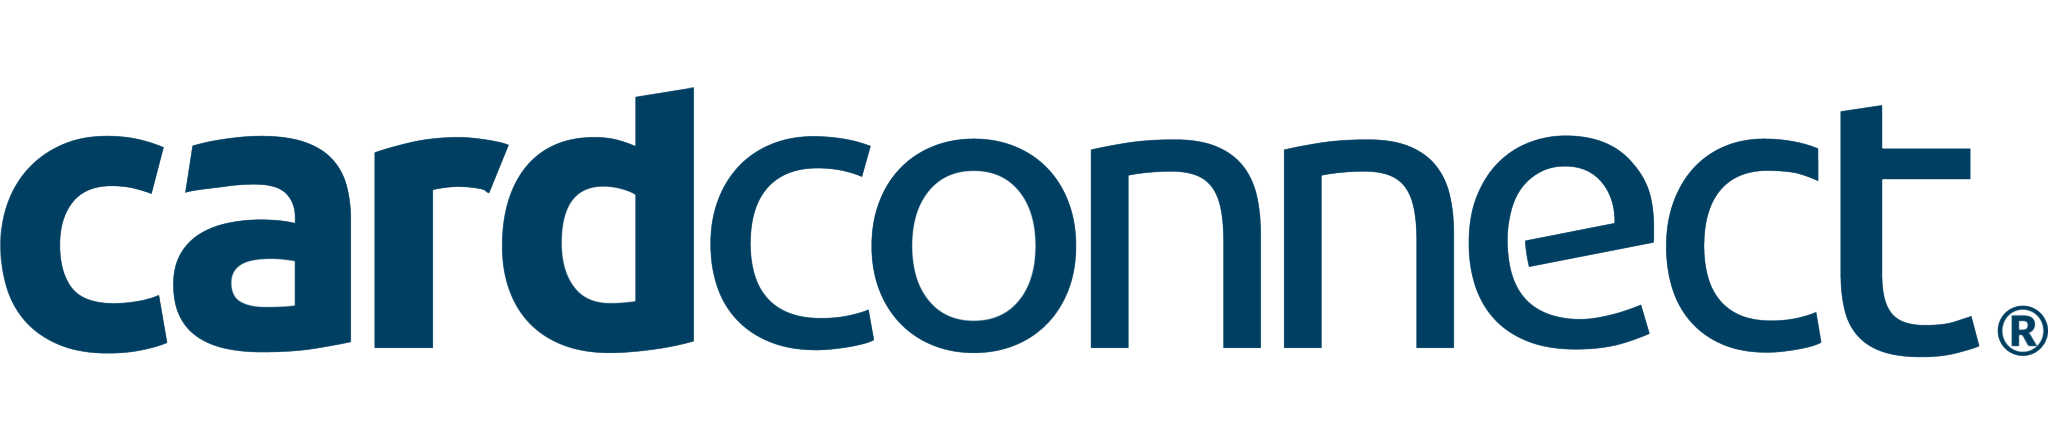 CardConnect-Logo